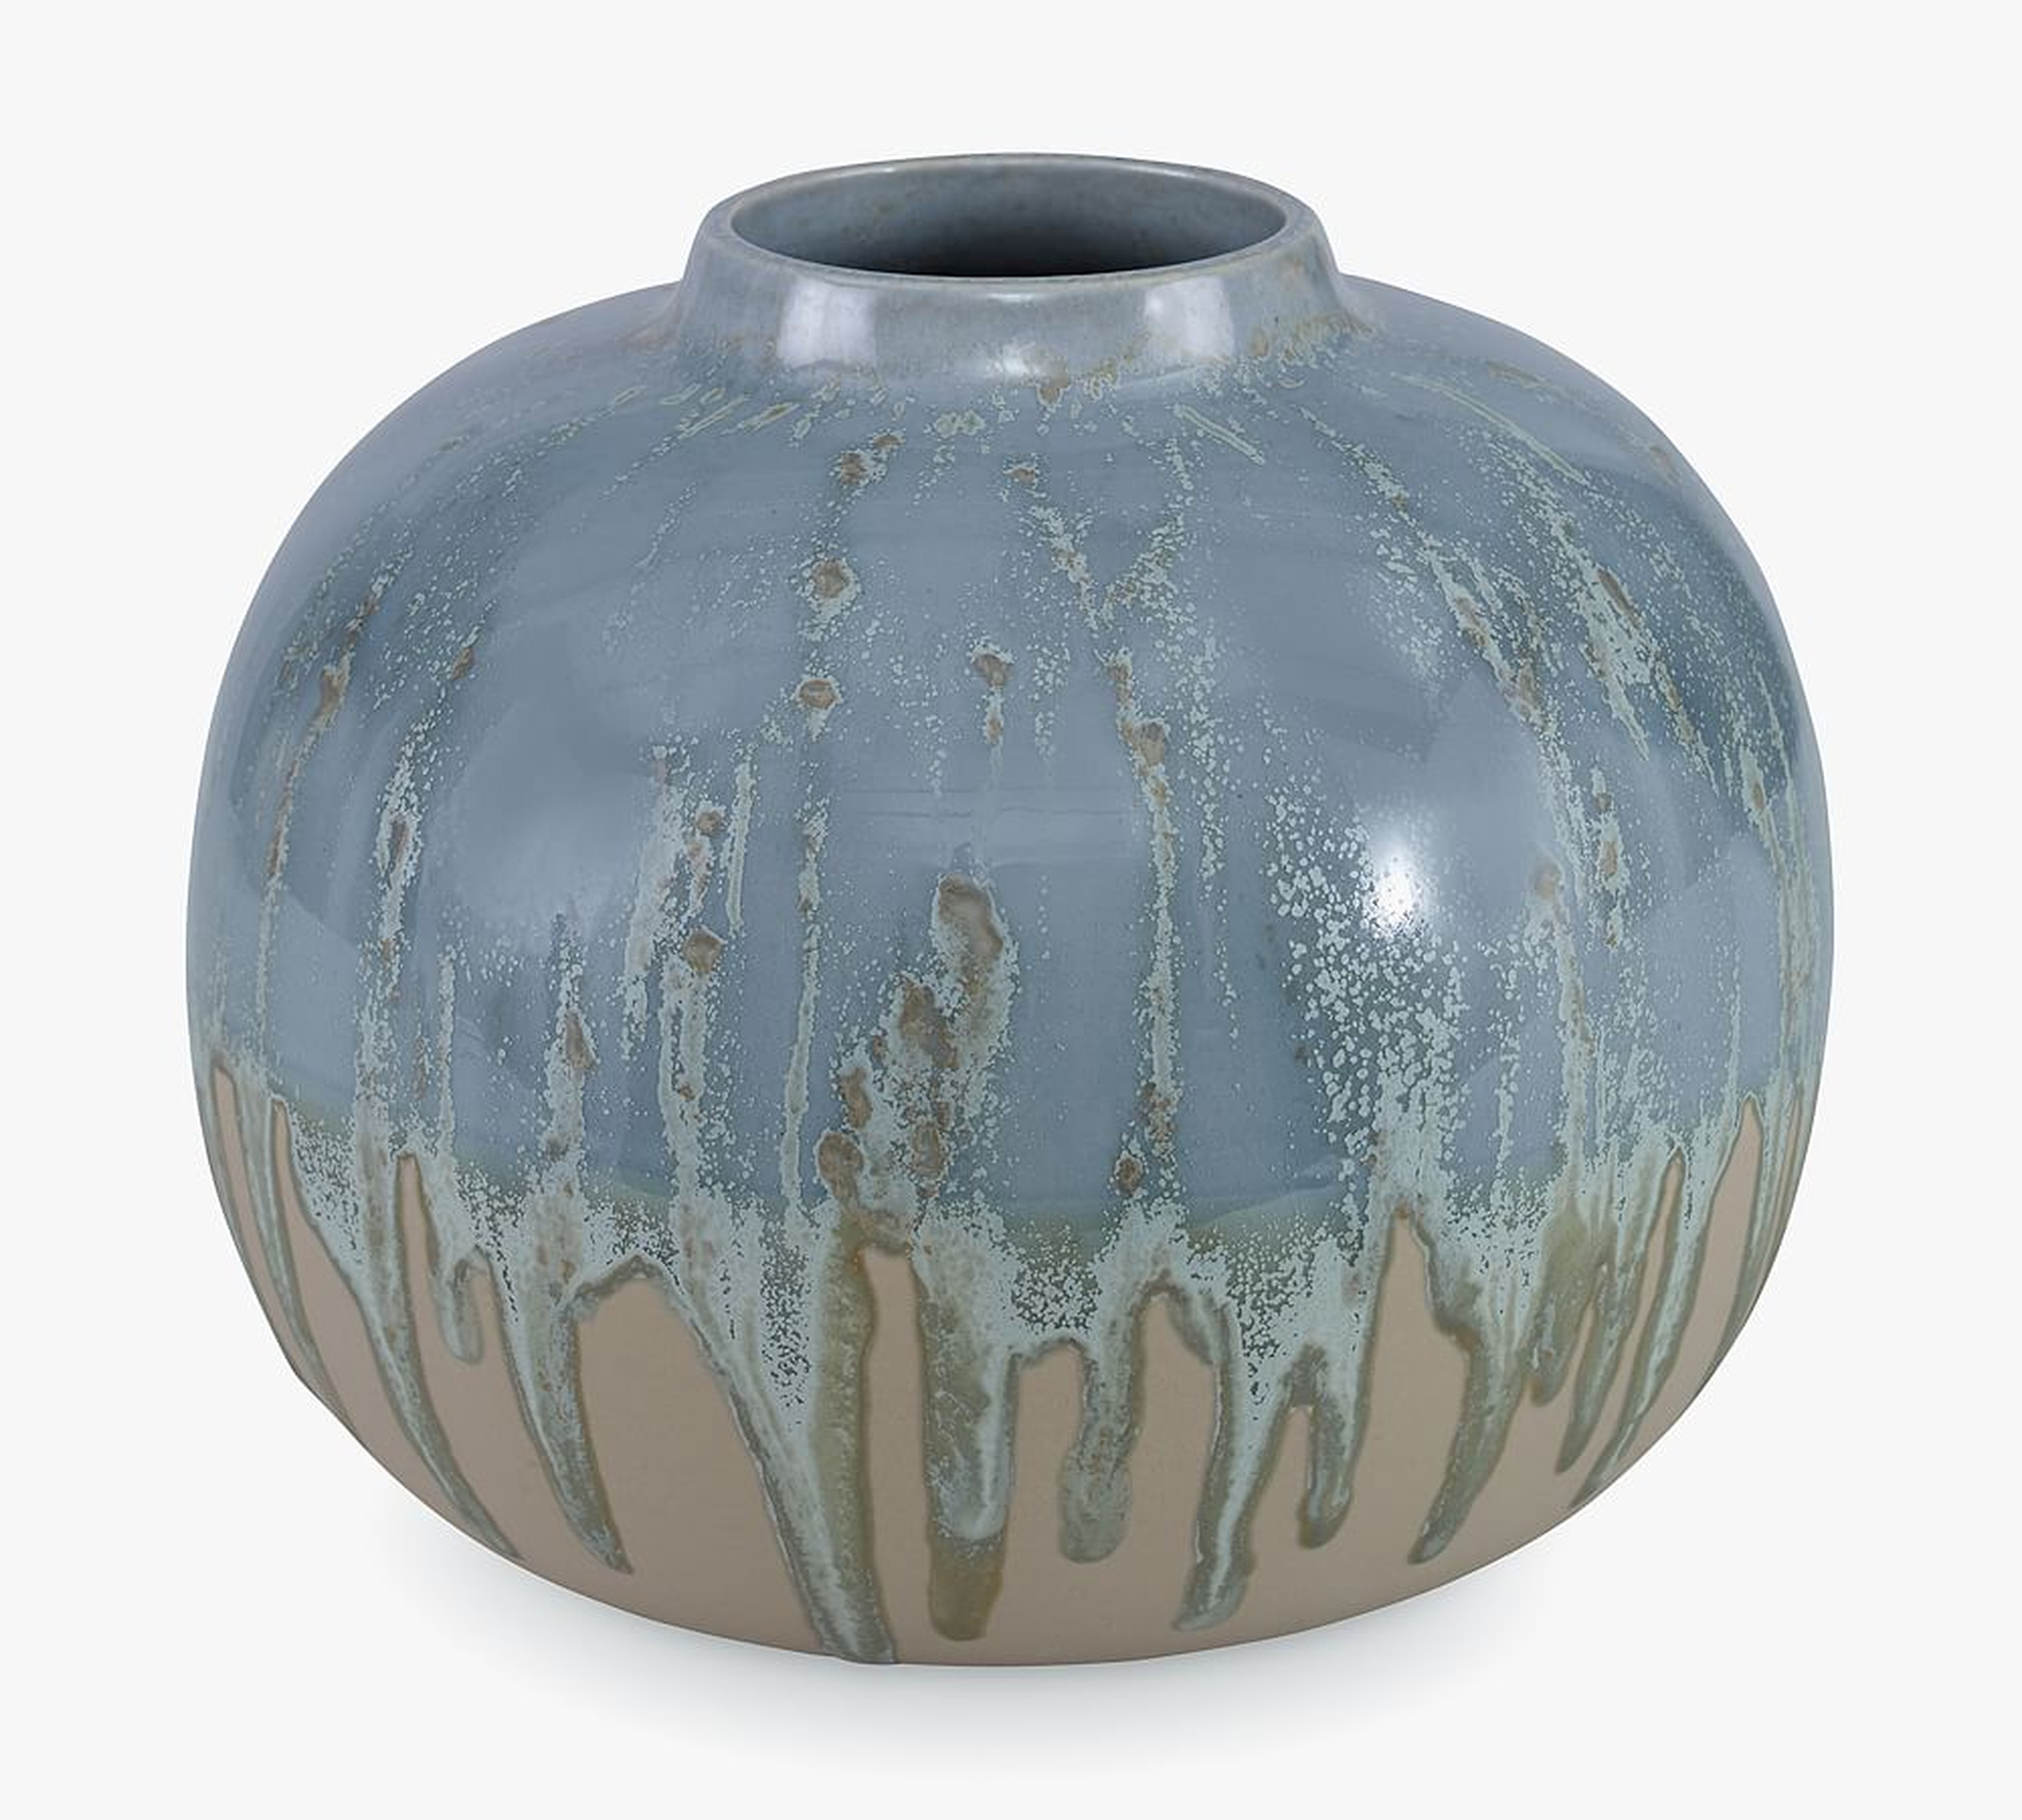 Arley Handcrafted Ceramic Vase, 7"H - Pottery Barn